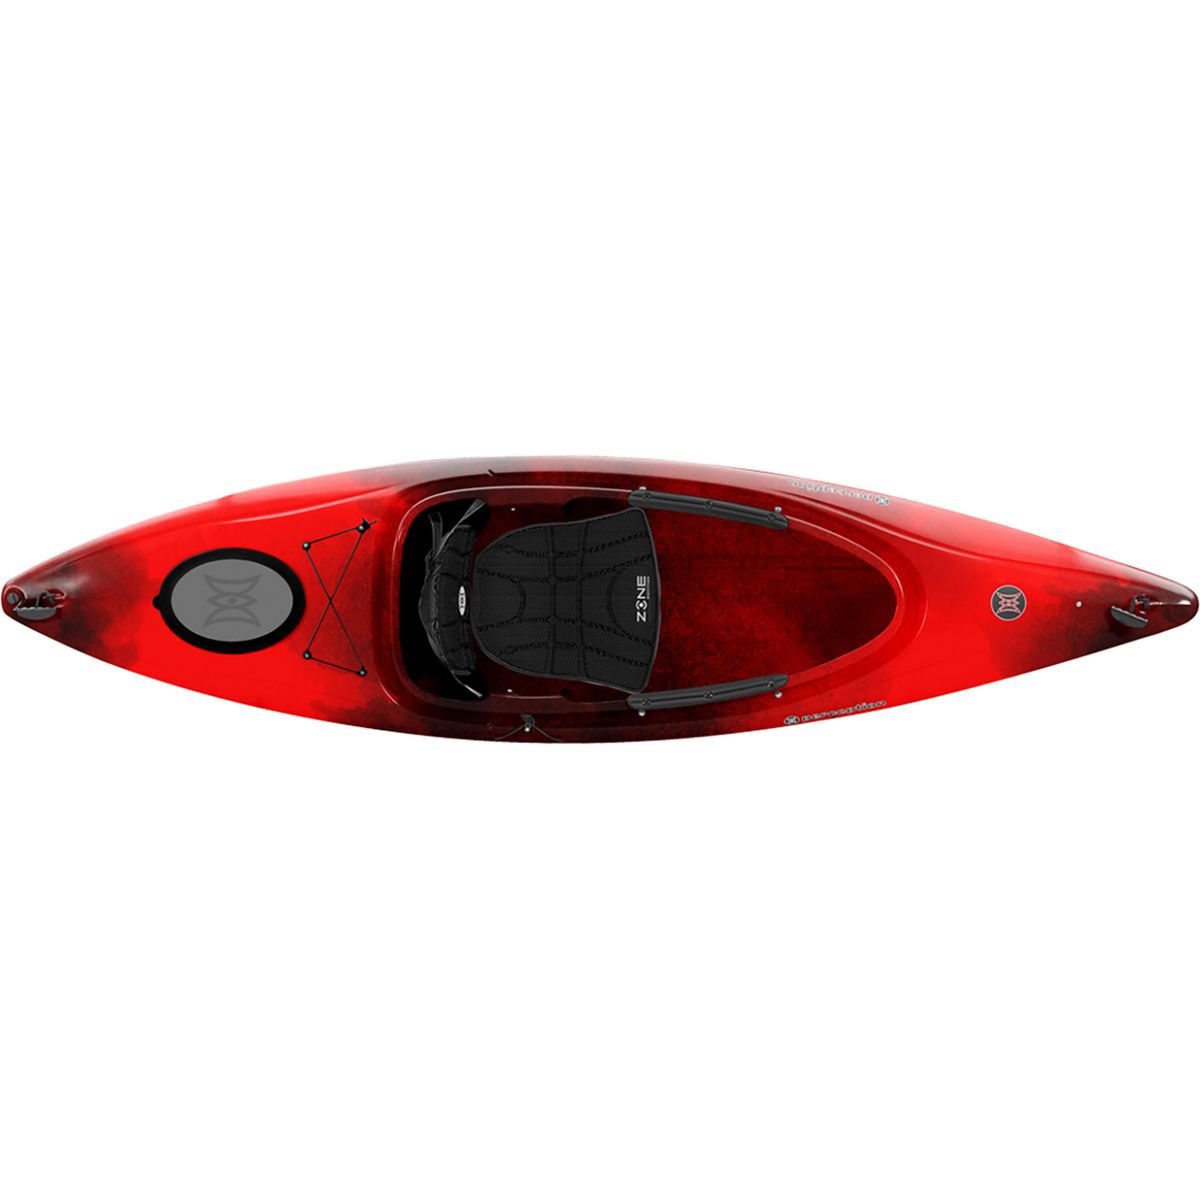 Color:Red Tiger Camo:Perception Prodigy 10.0 Kayak